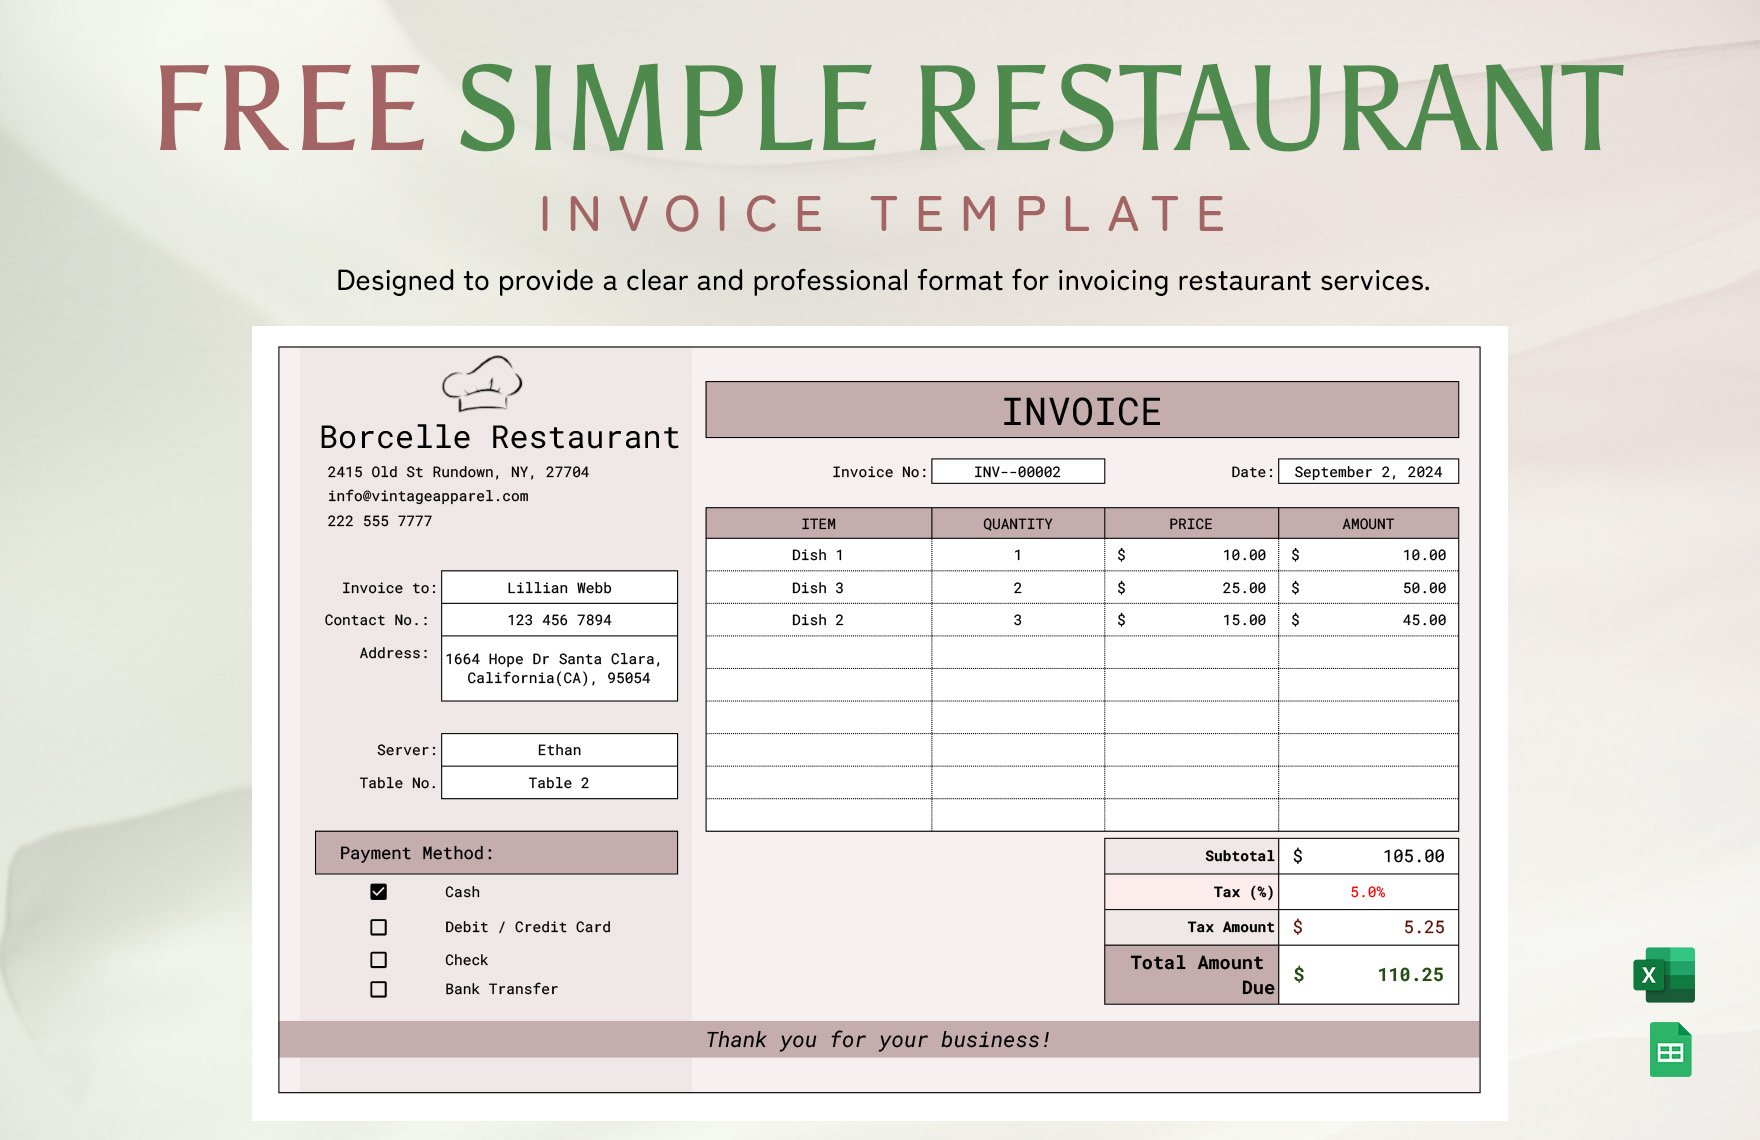 Simple Restaurant Invoice Template